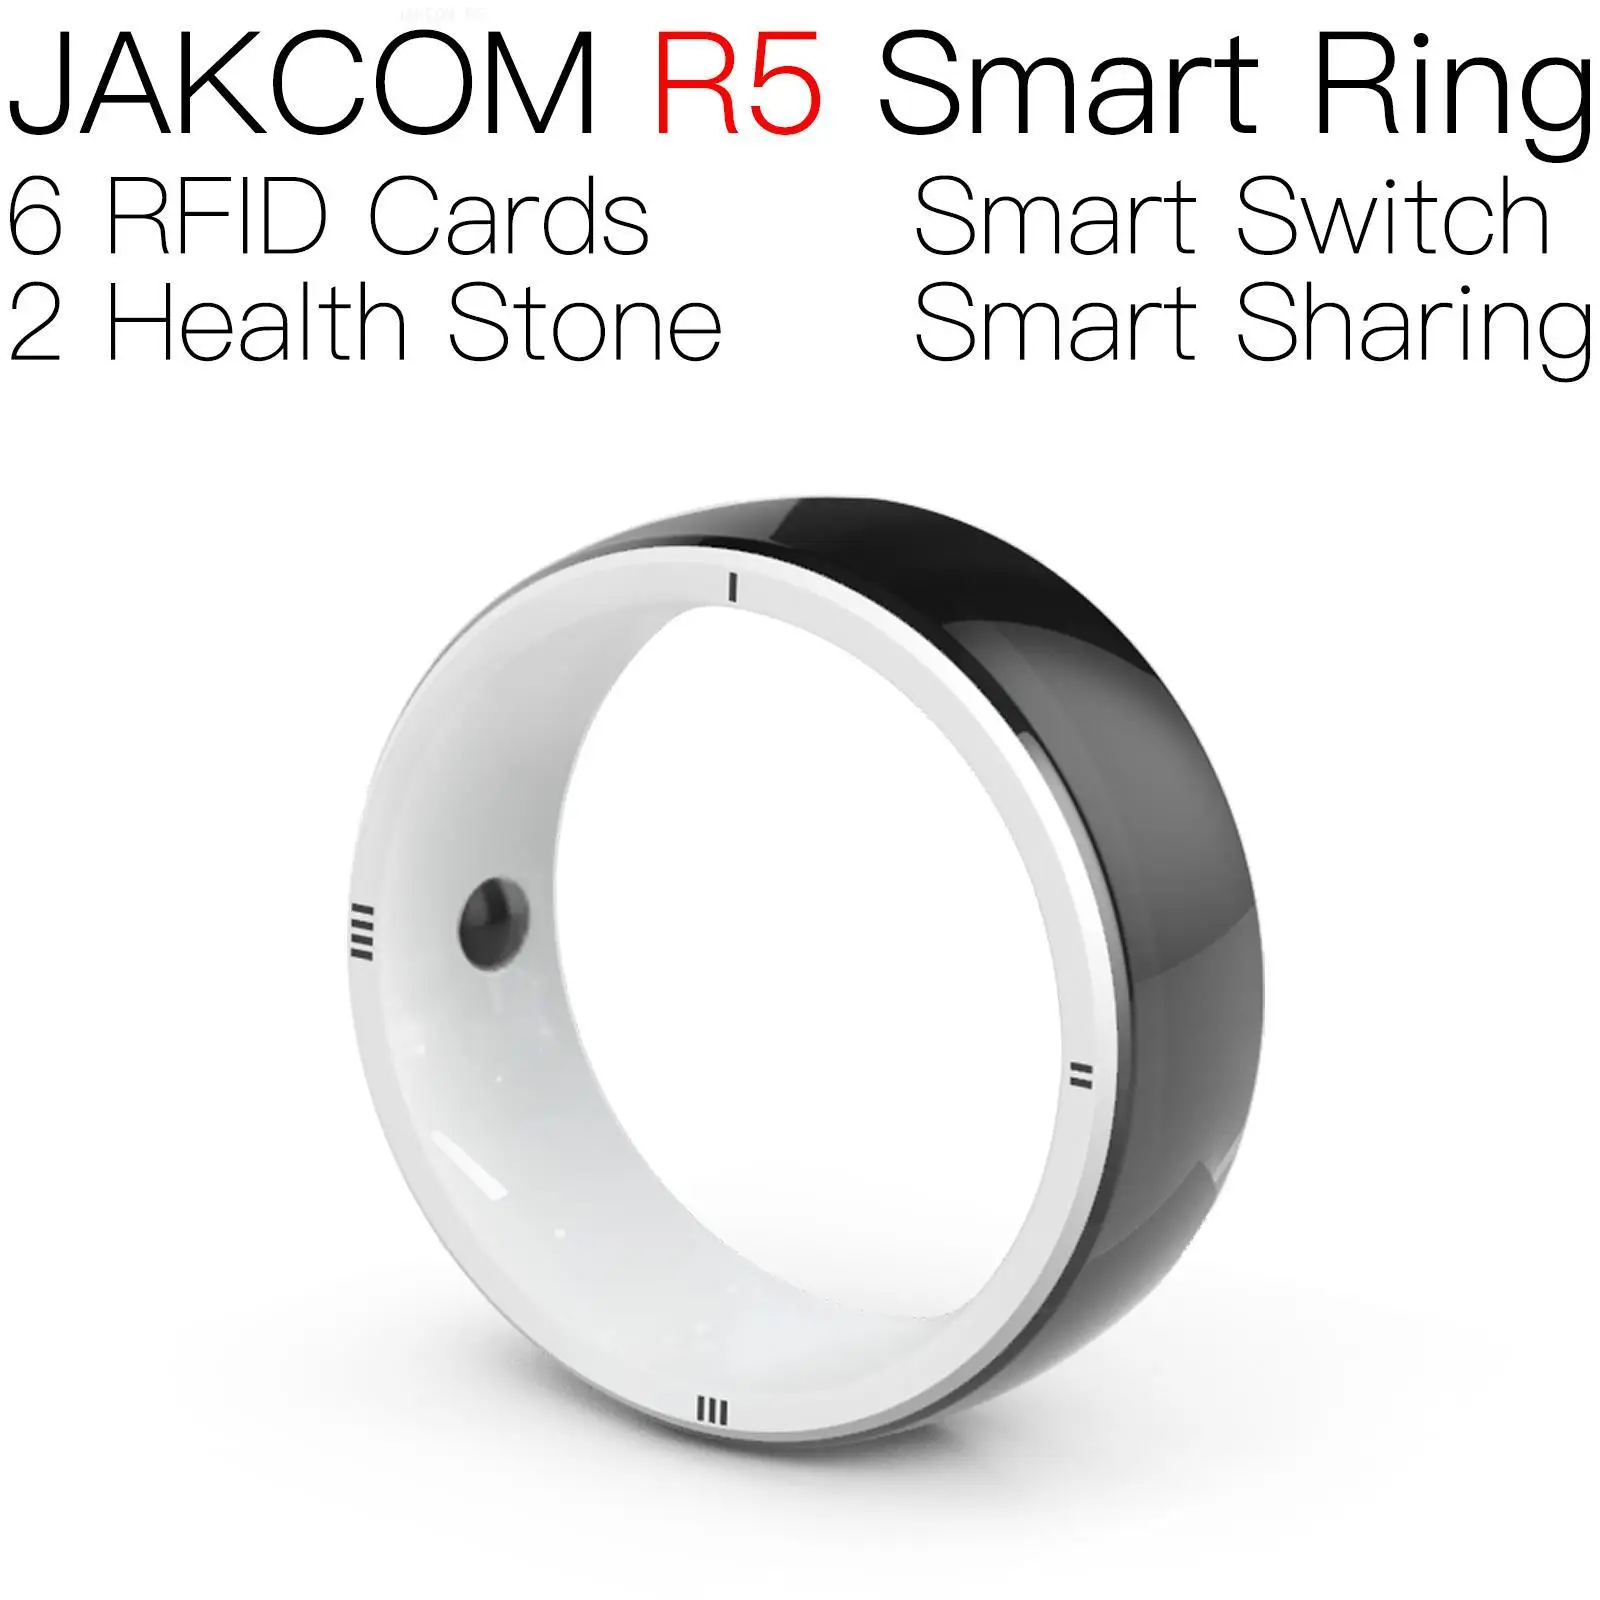 

JAKCOM R5 Smart Ring Super value than nfc long range electronic ear tag drop chiping chip dog reader 125khz bracelet microchip